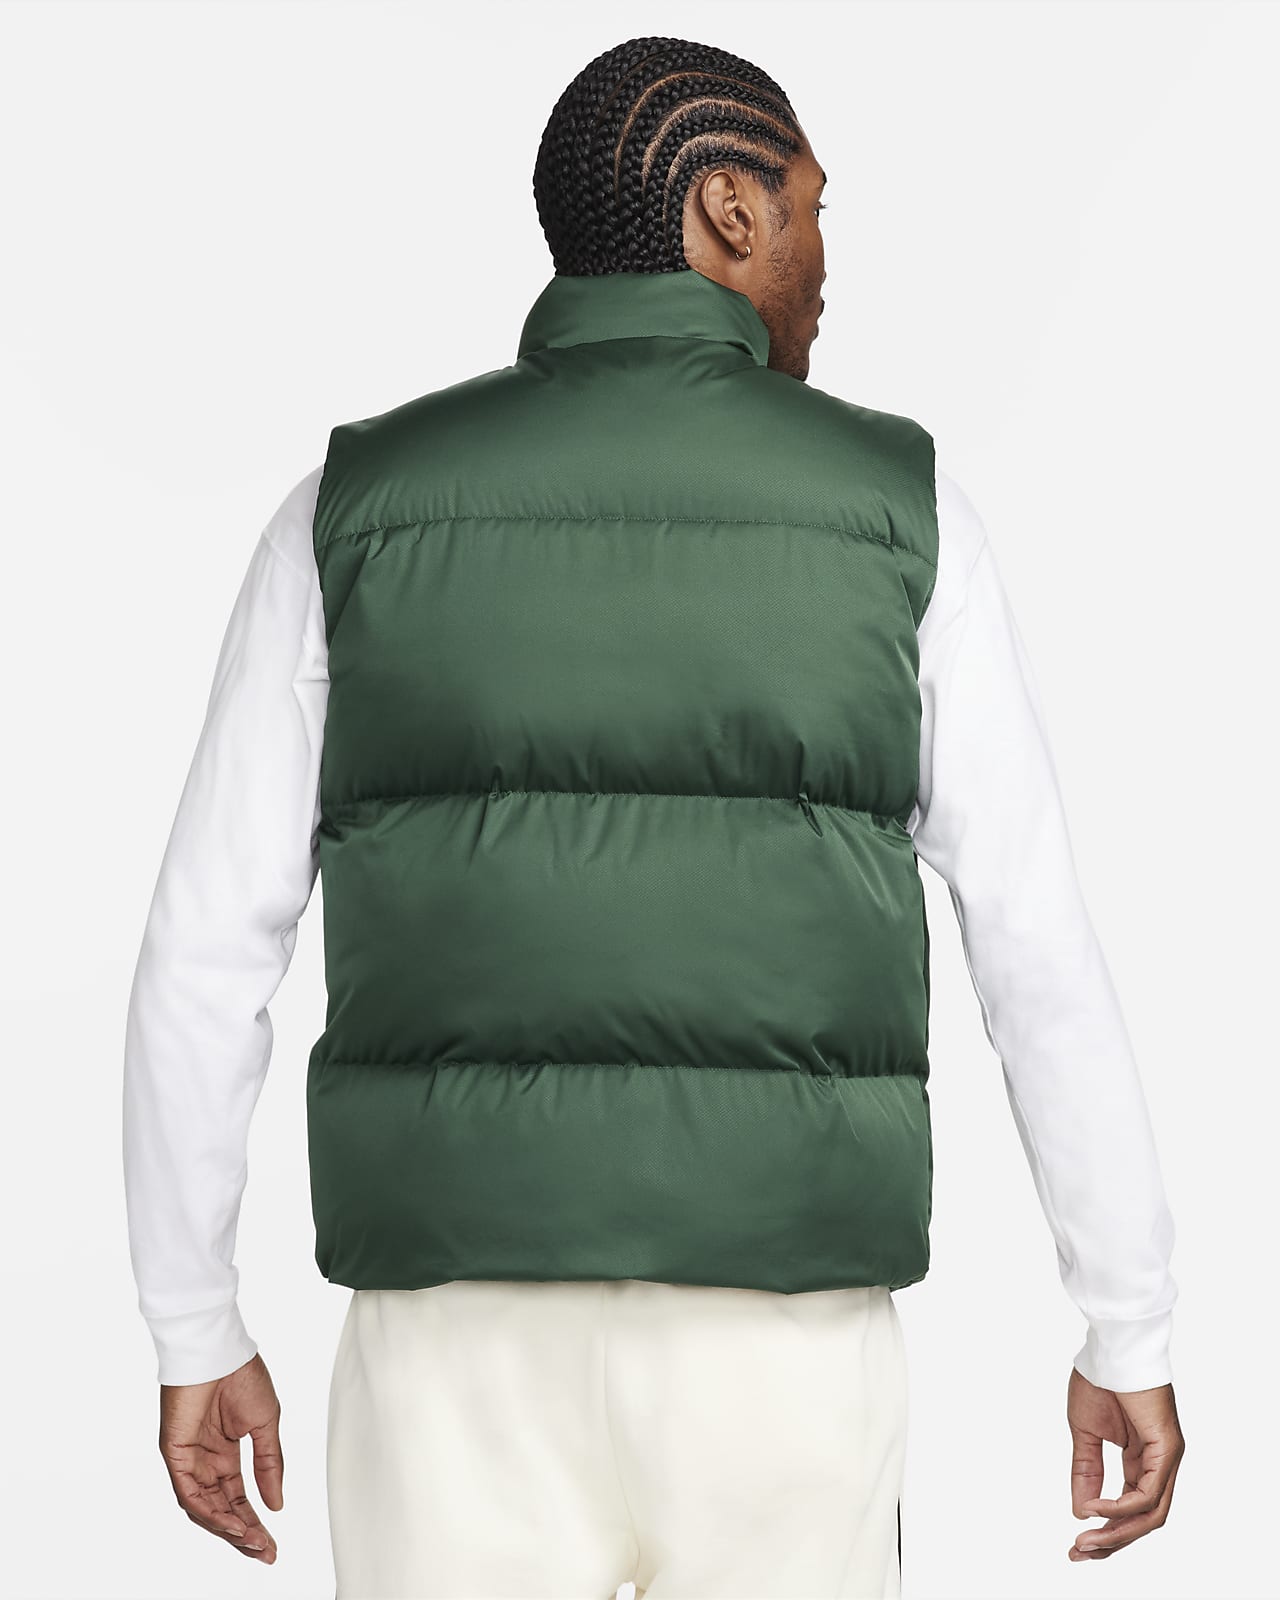 Nike Sportswear Club PrimaLoft® Men's Water-Repellent Puffer Vest.